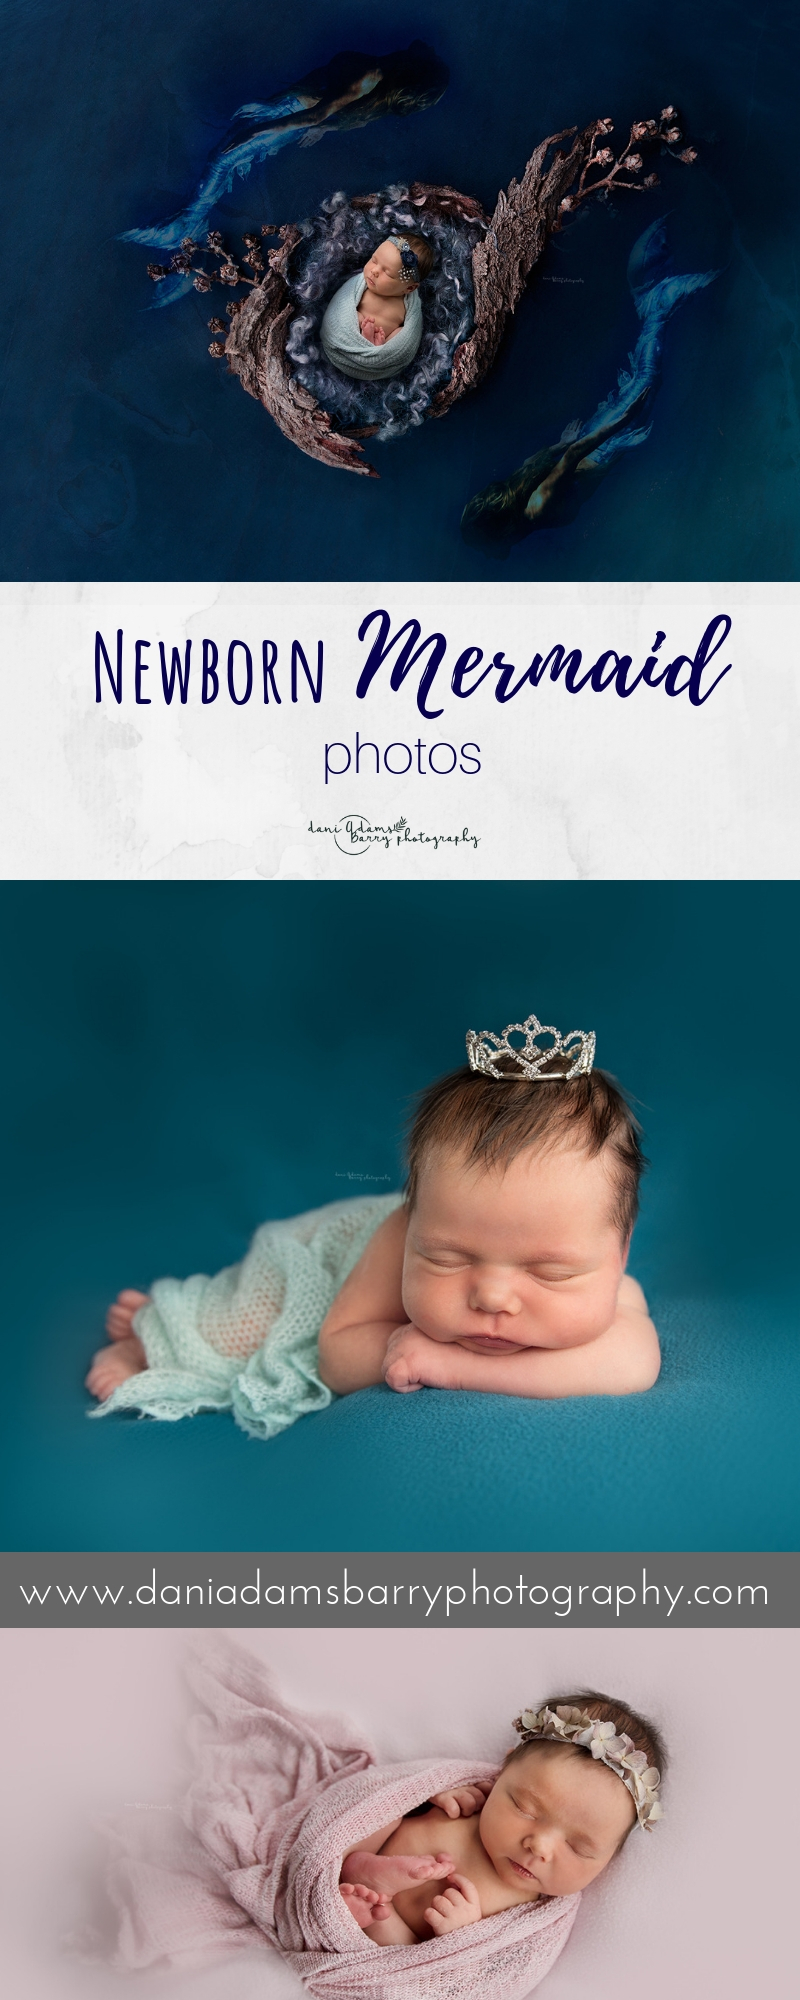 Newborn Photography Dallas TX - Mermaid Baby Photos